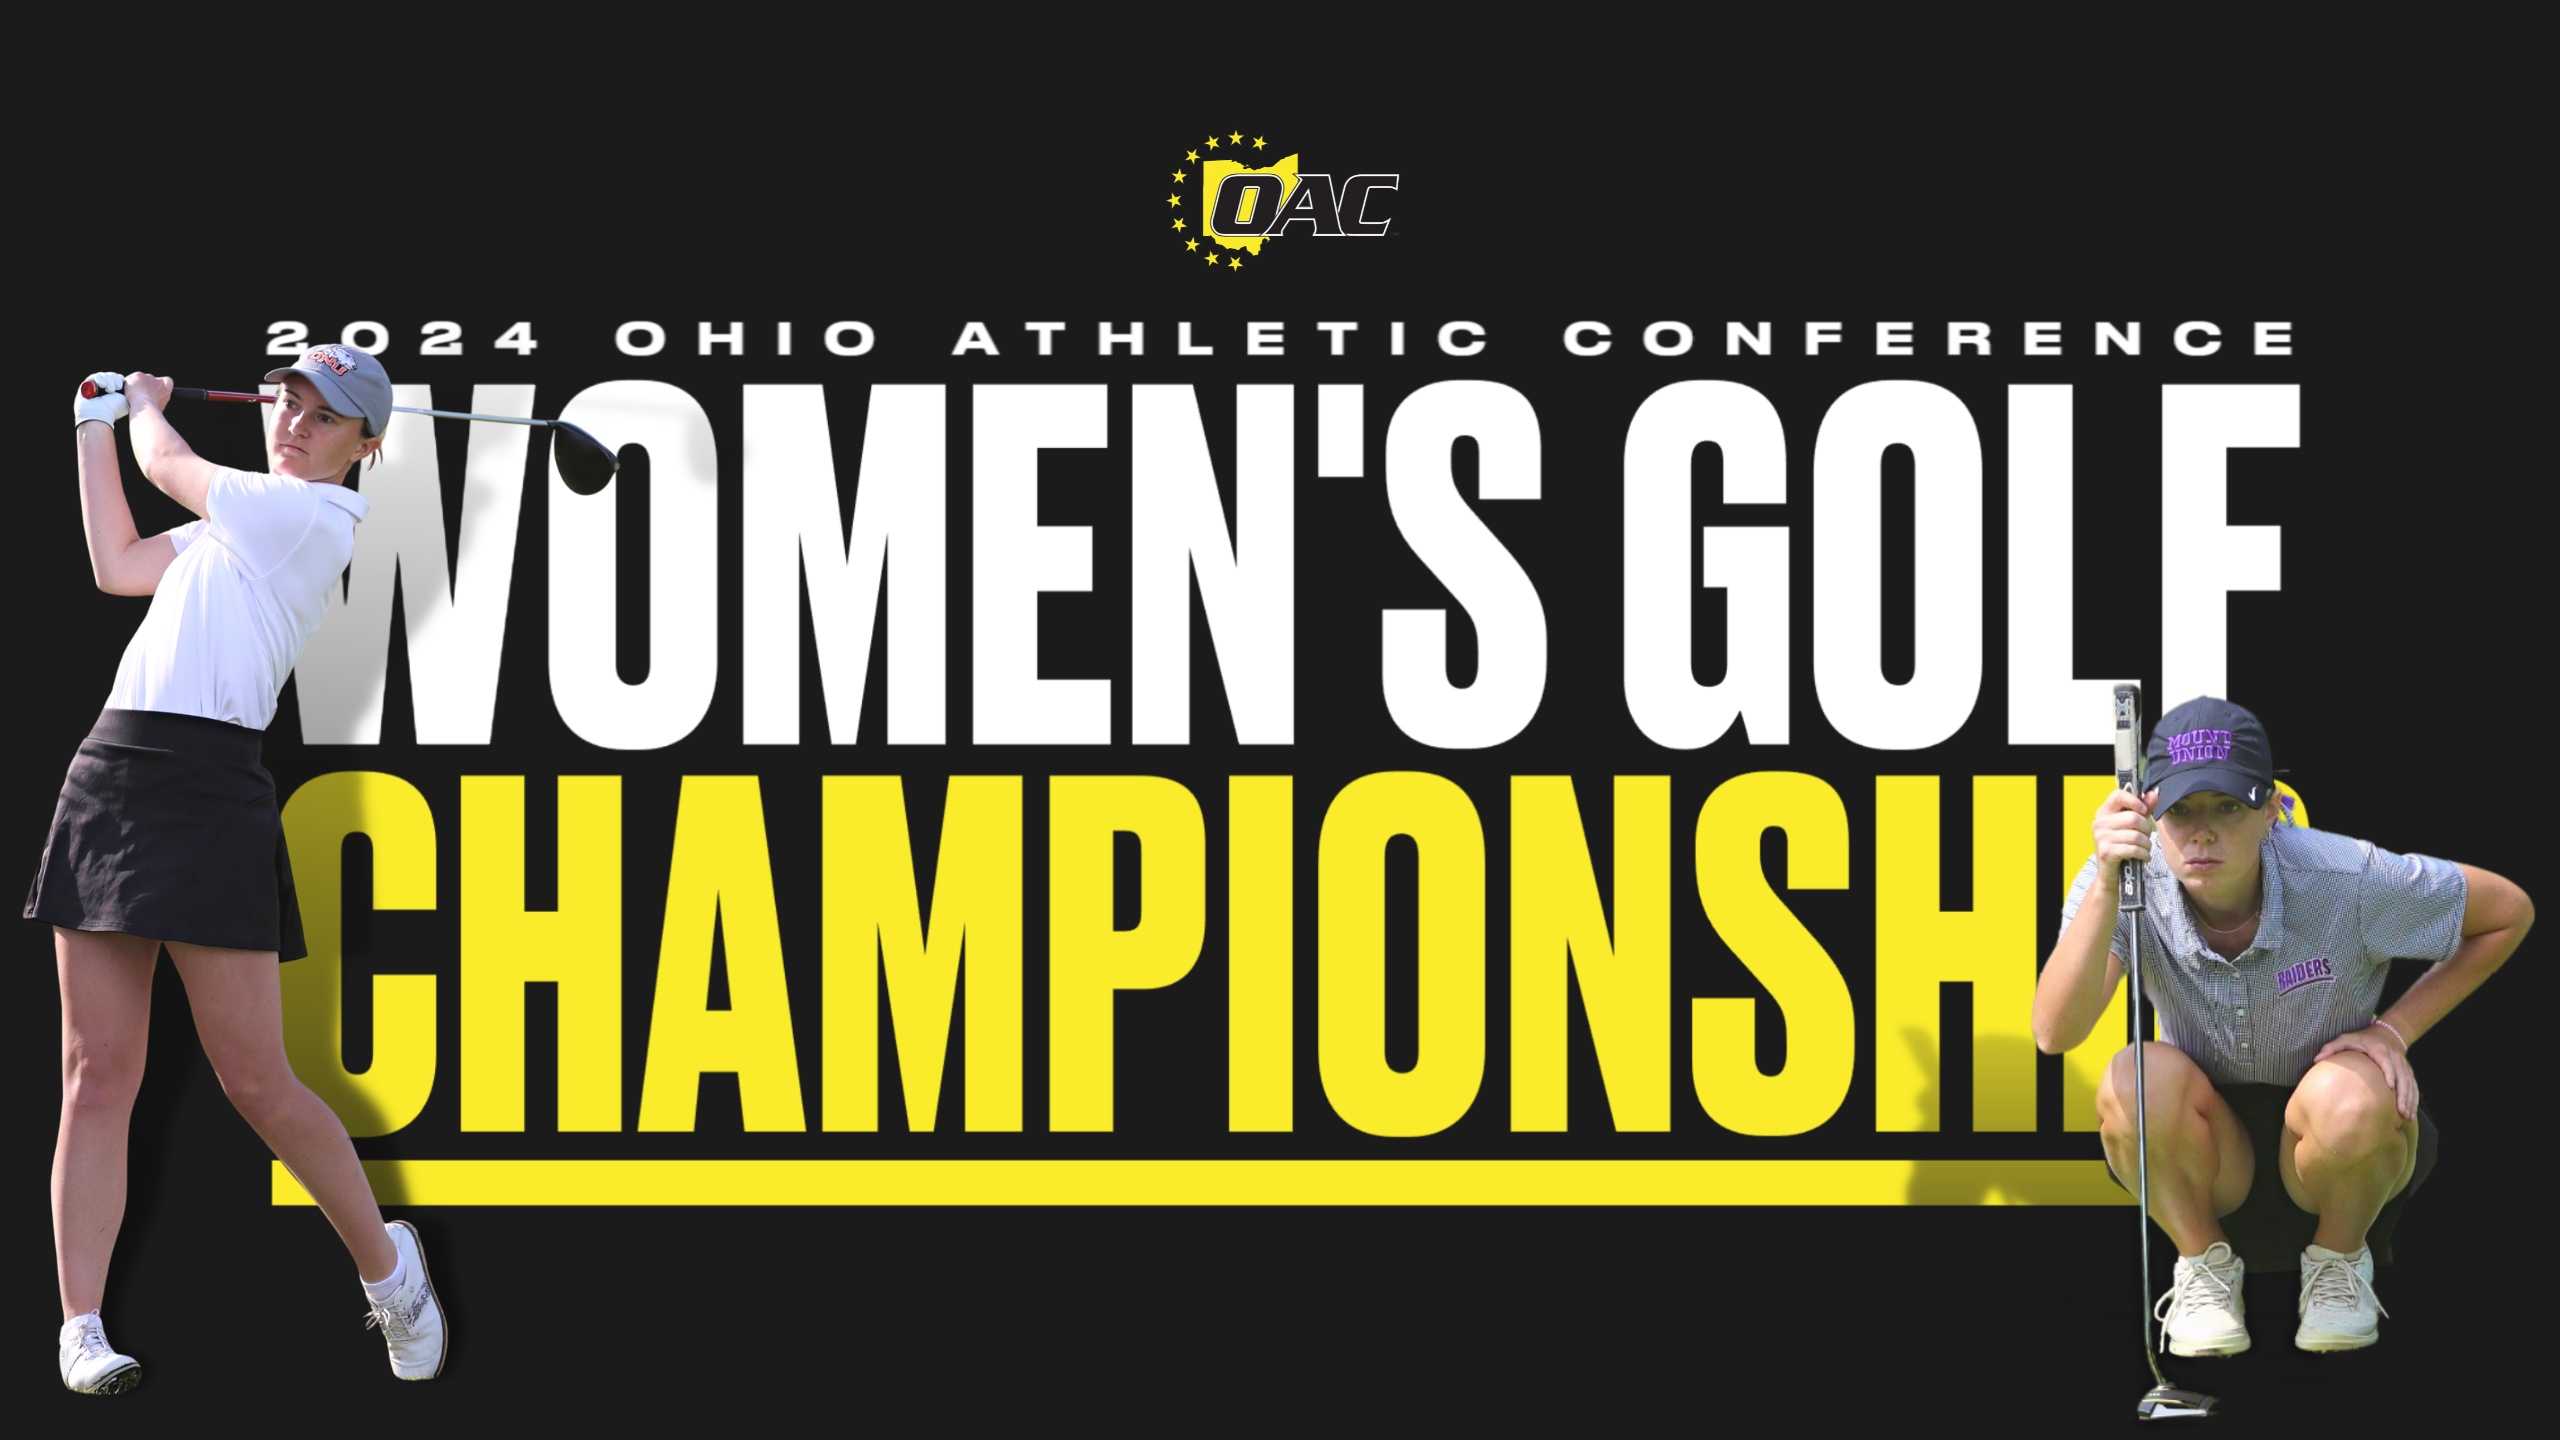 OAC Women's Golf Championship | May 3-5